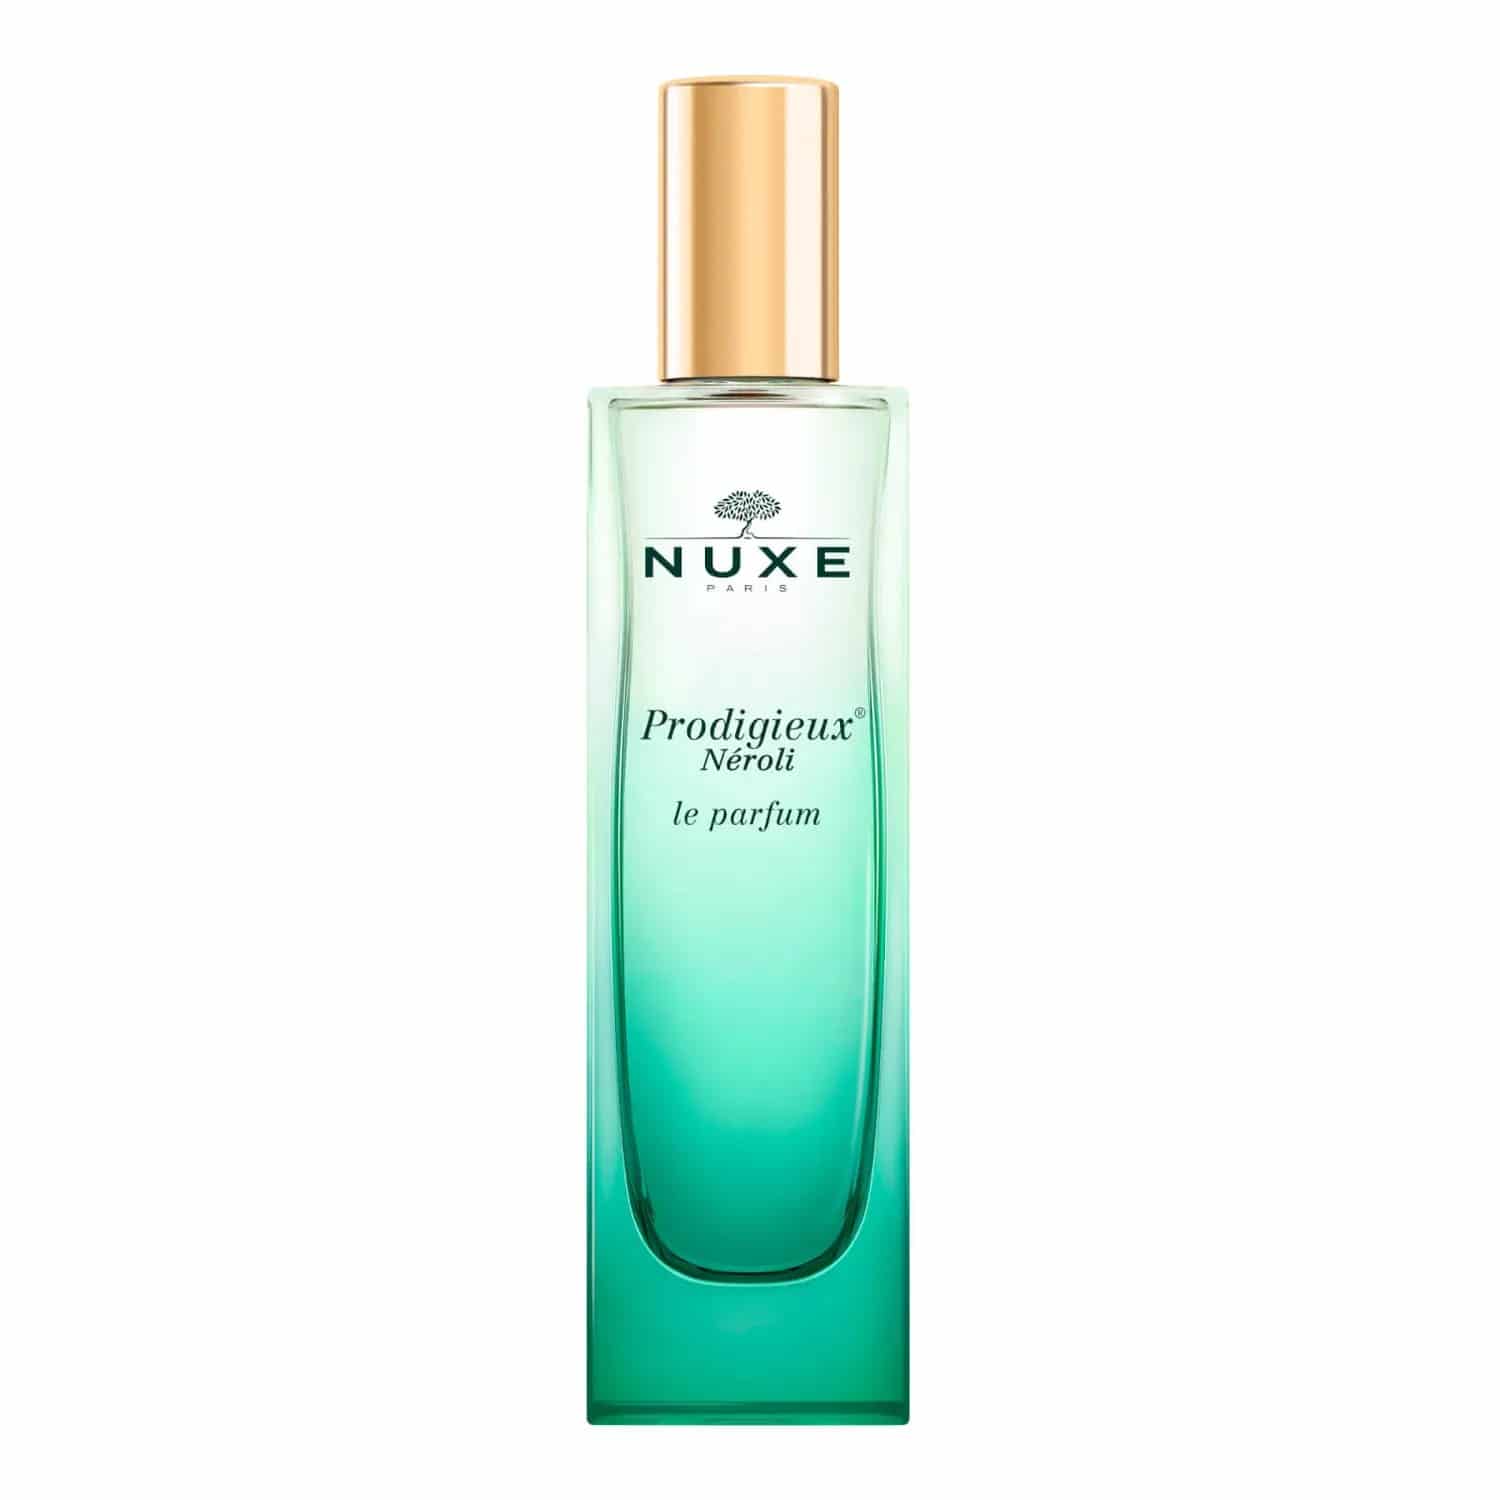 Nuxe Parfum Prodigieux Neroli 50ml